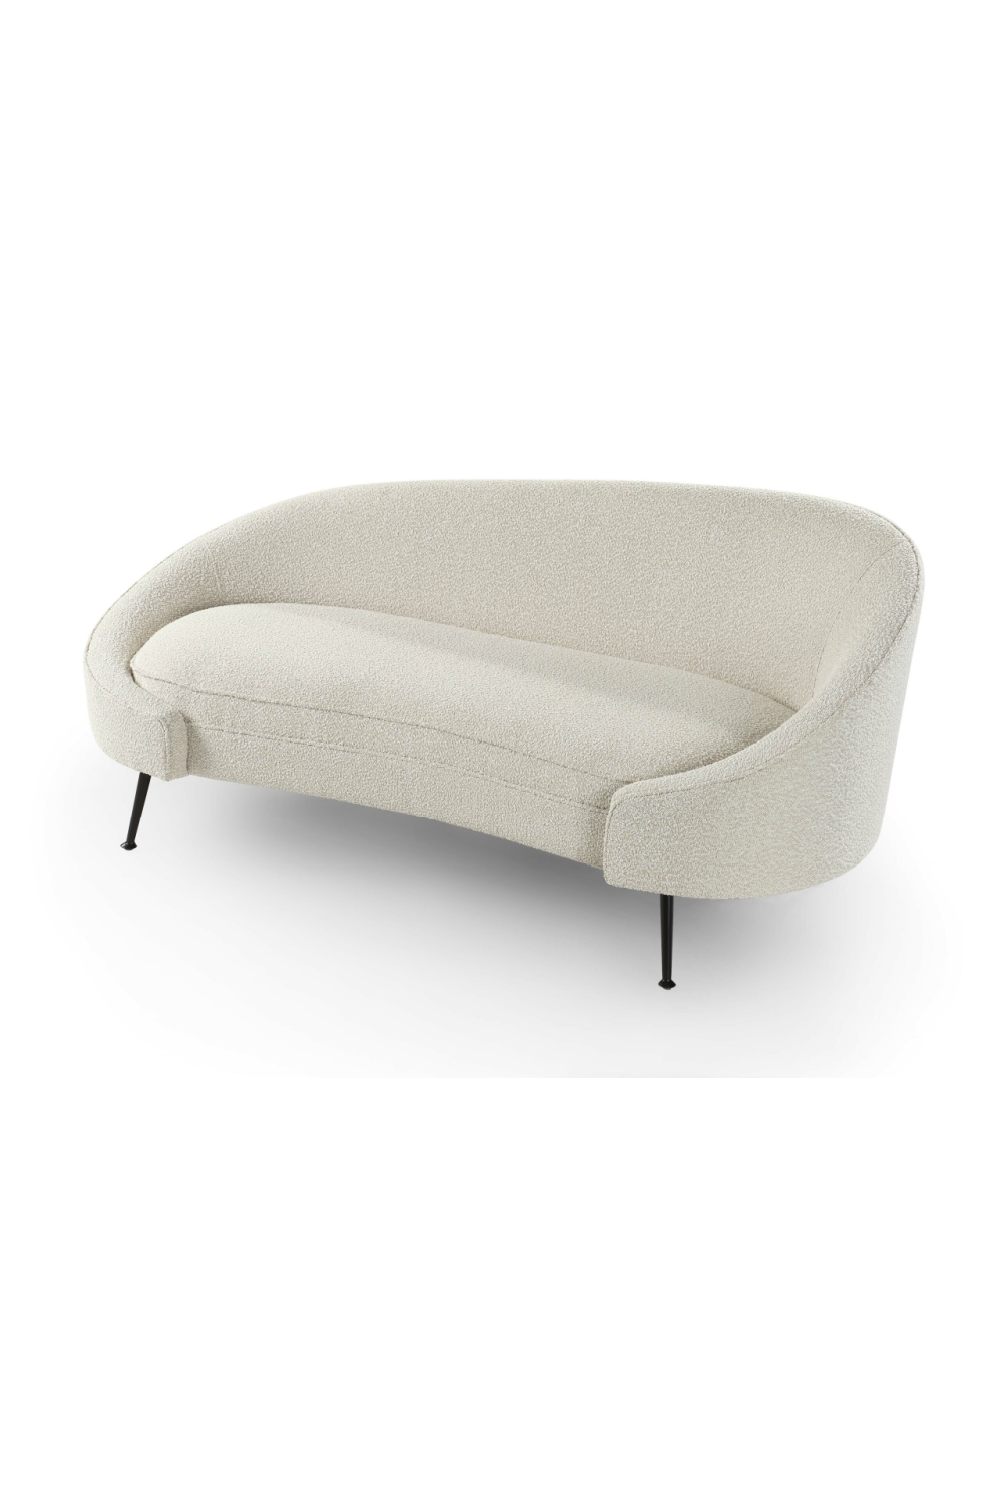 Asymmetrical Contemporary Sofa | Liang & Eimil Aspen | Oroa.com